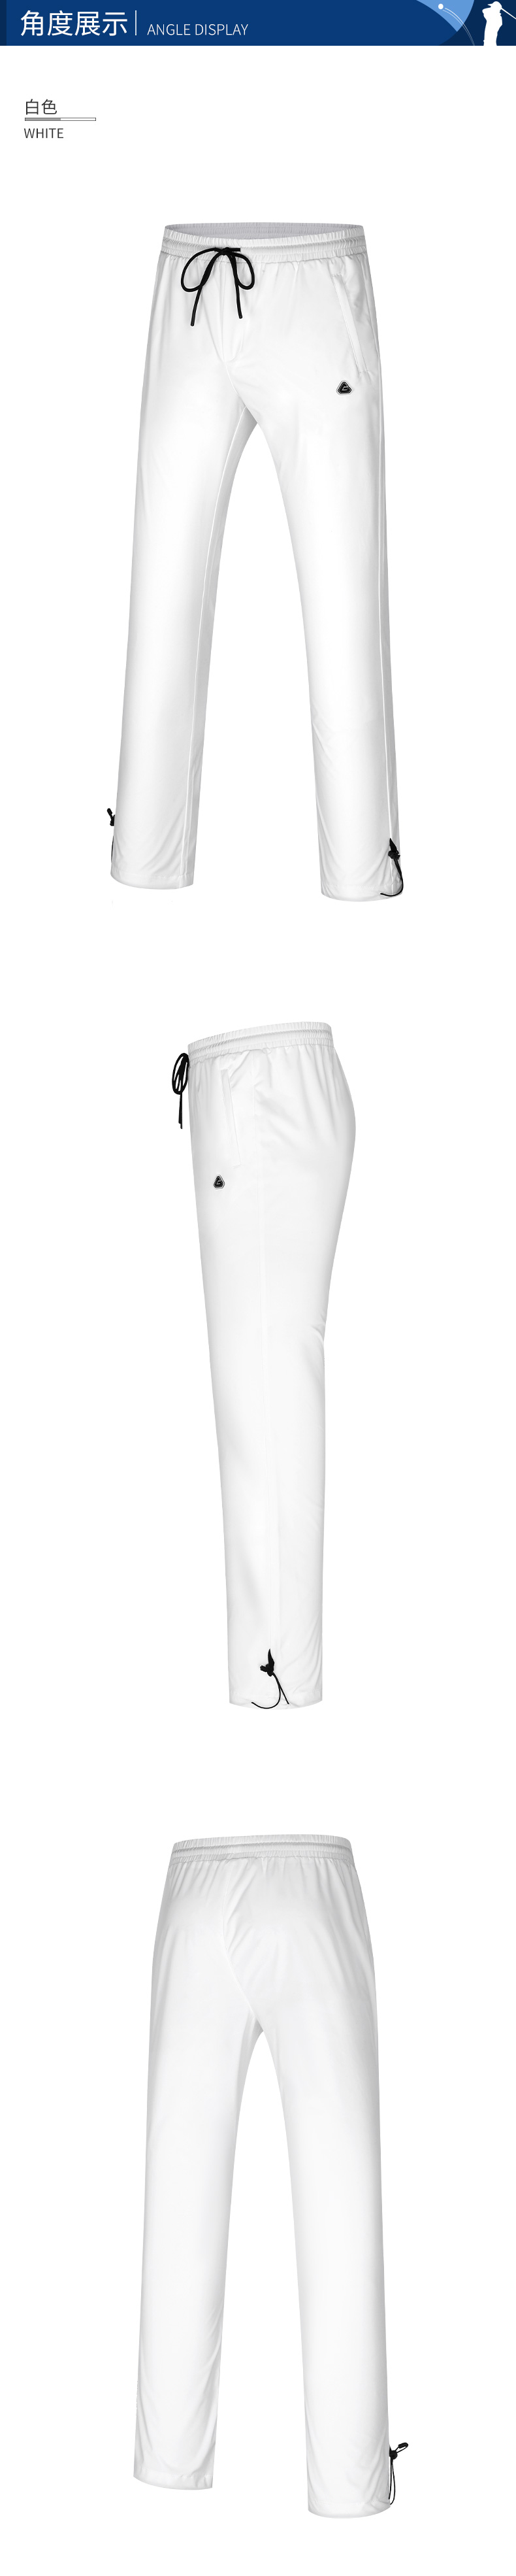 PGM 高尔夫裤子男装服装夏季运动长裤golf防水雨裤调节松紧腰带